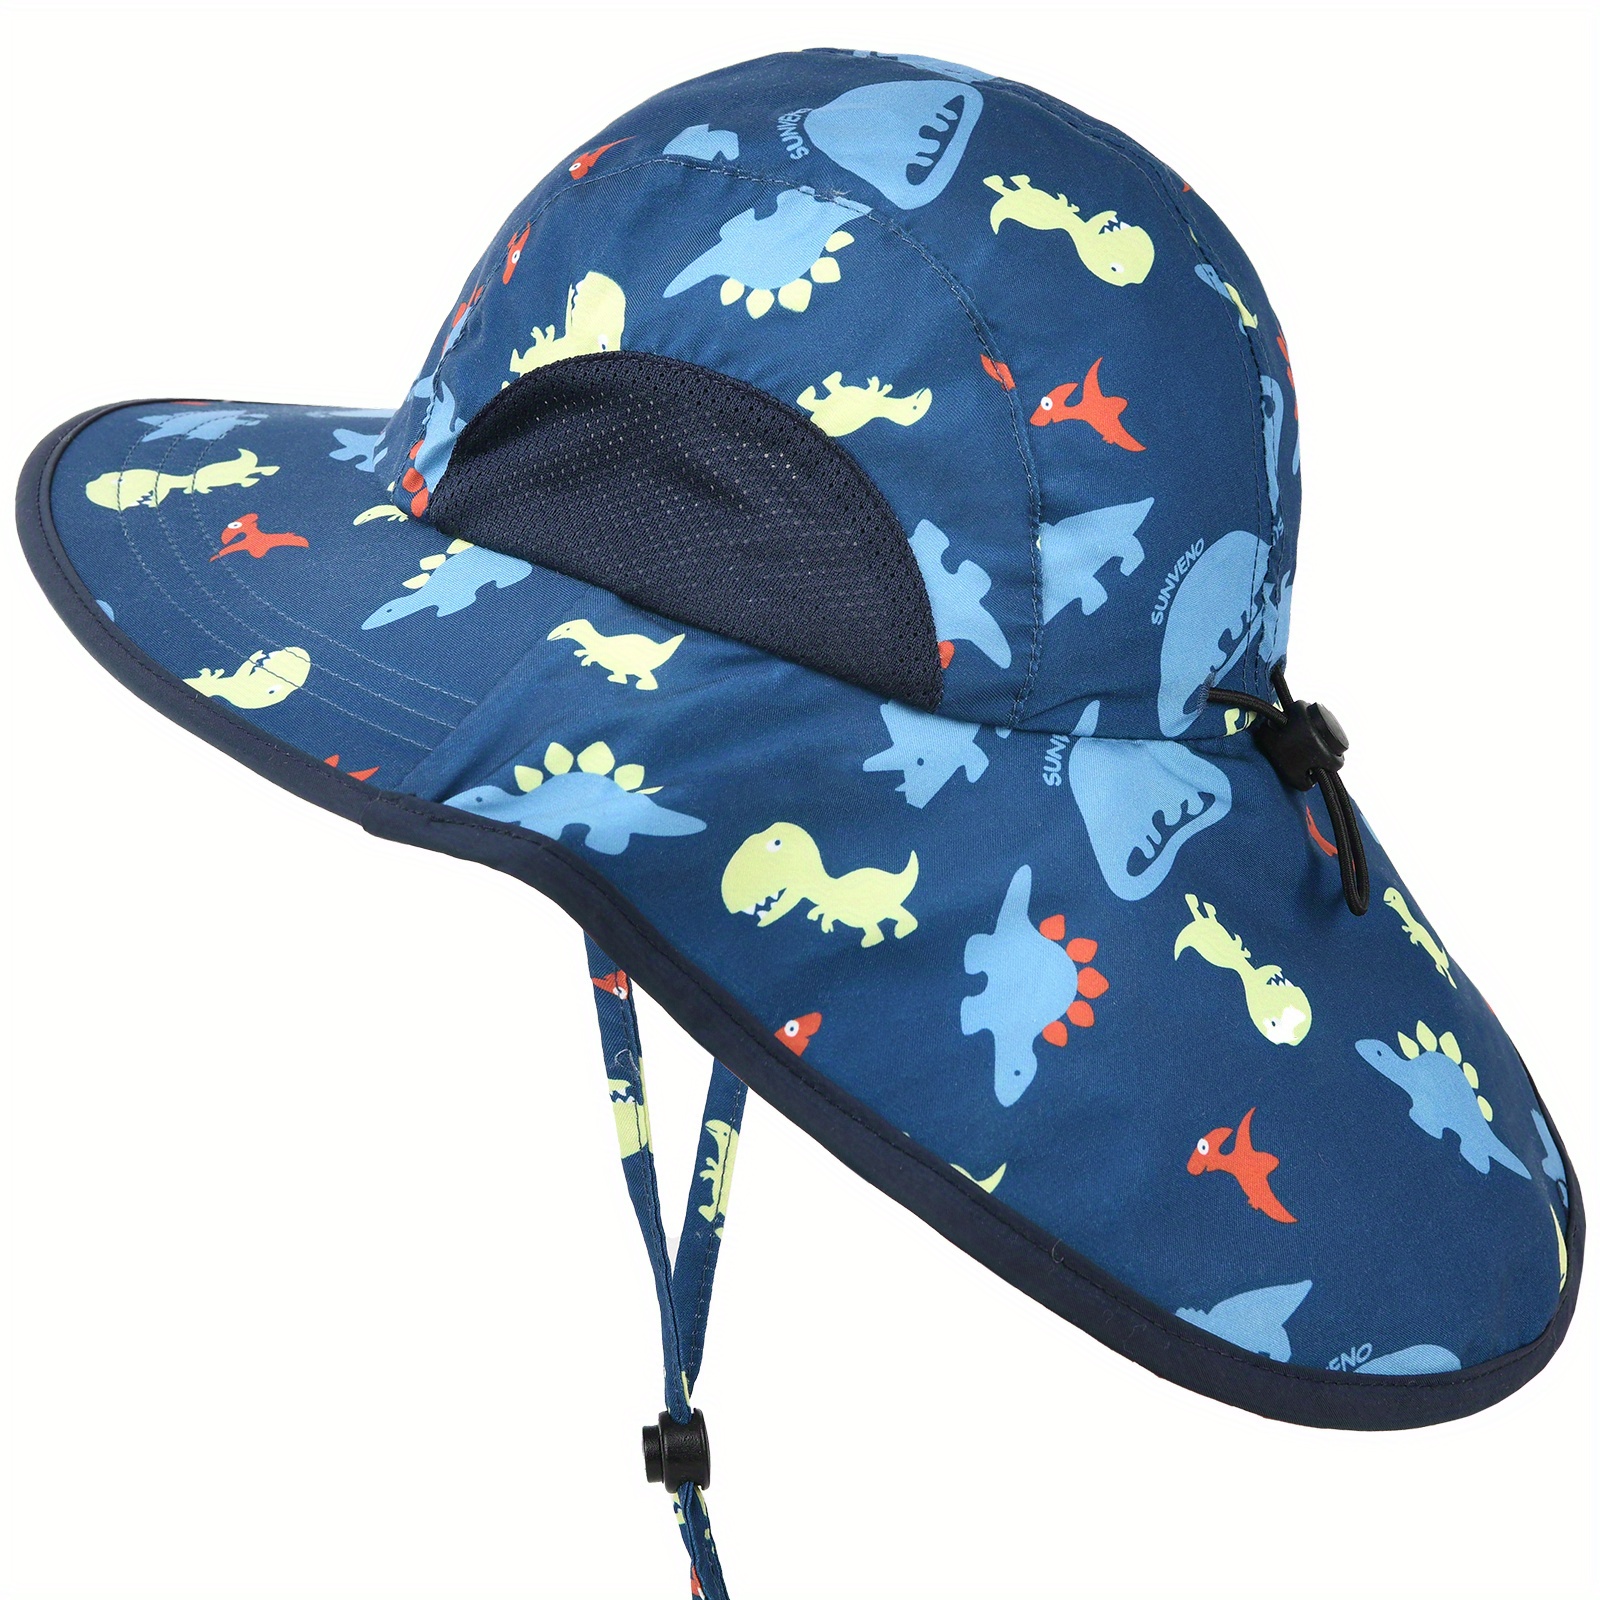  Connectyle Unisex Kids Fishing Sun Hat Boys Adjustable Wide  Brim Hat Hiking Safari Hats M Aqua Blue: Clothing, Shoes & Jewelry